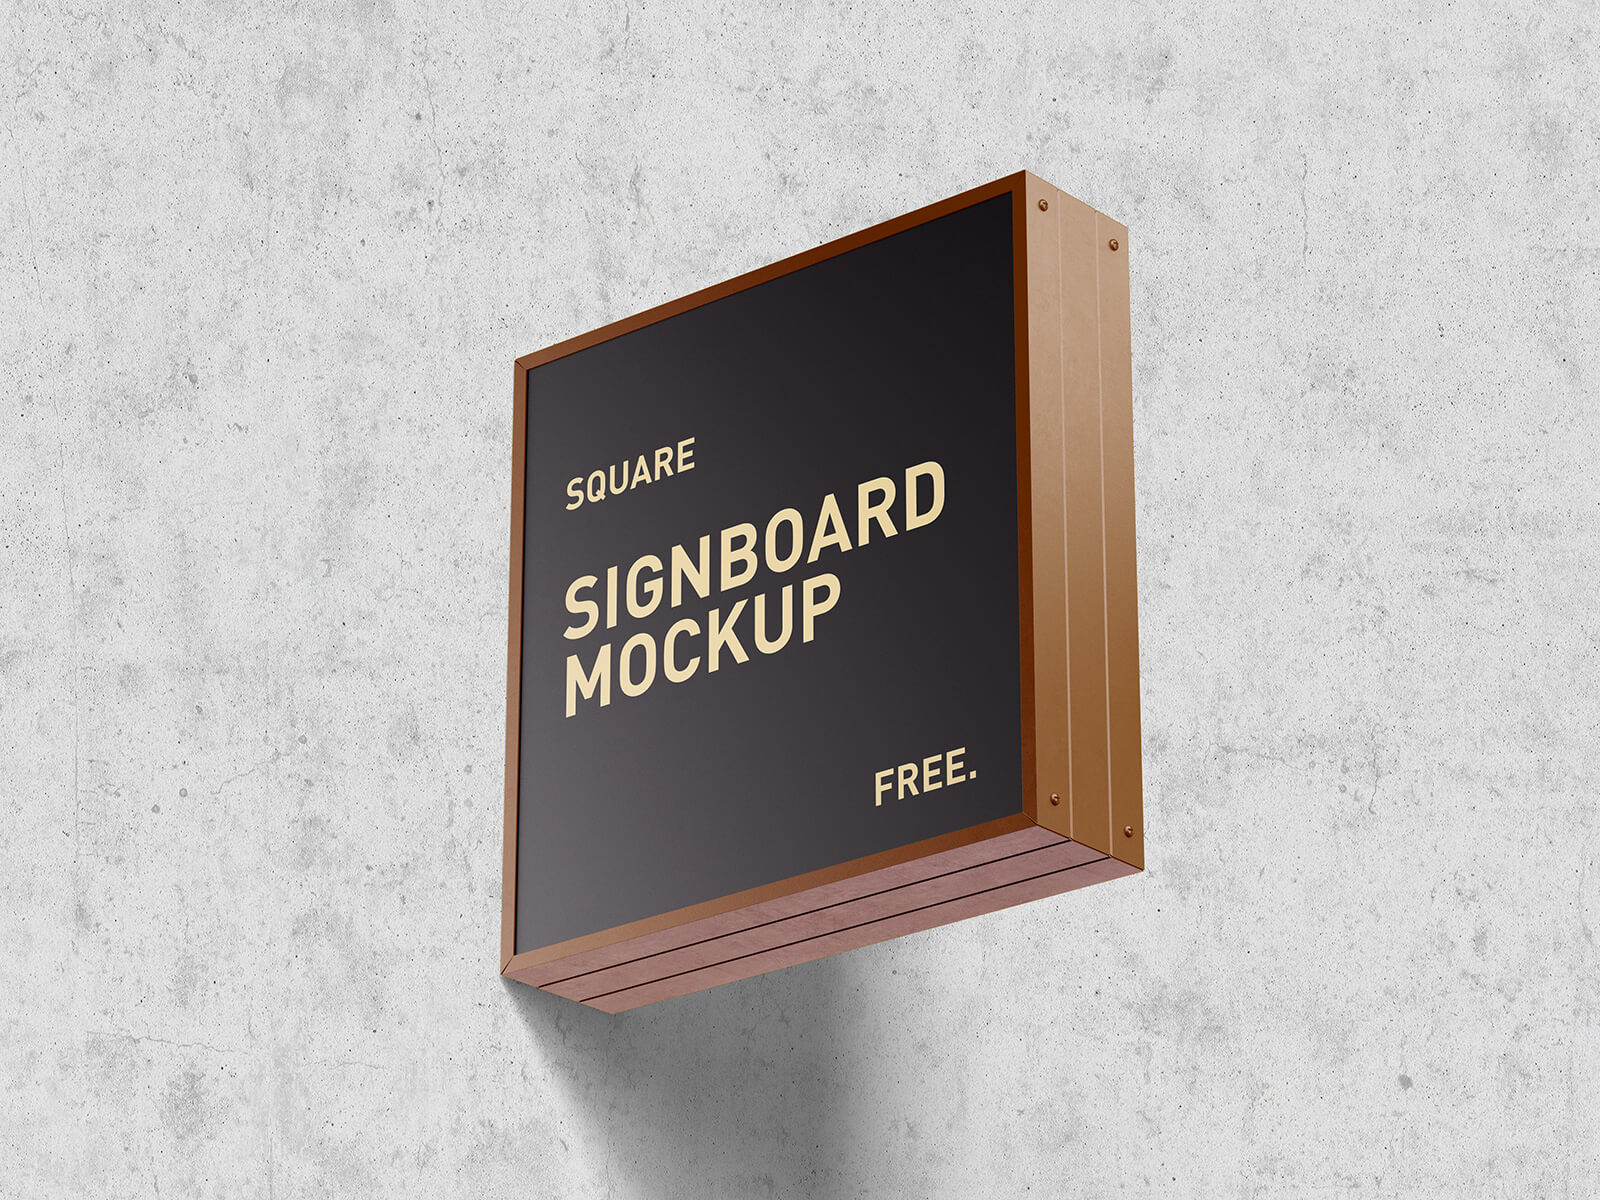 Free Wall Mounted Square Signboard Mockup PSD Files